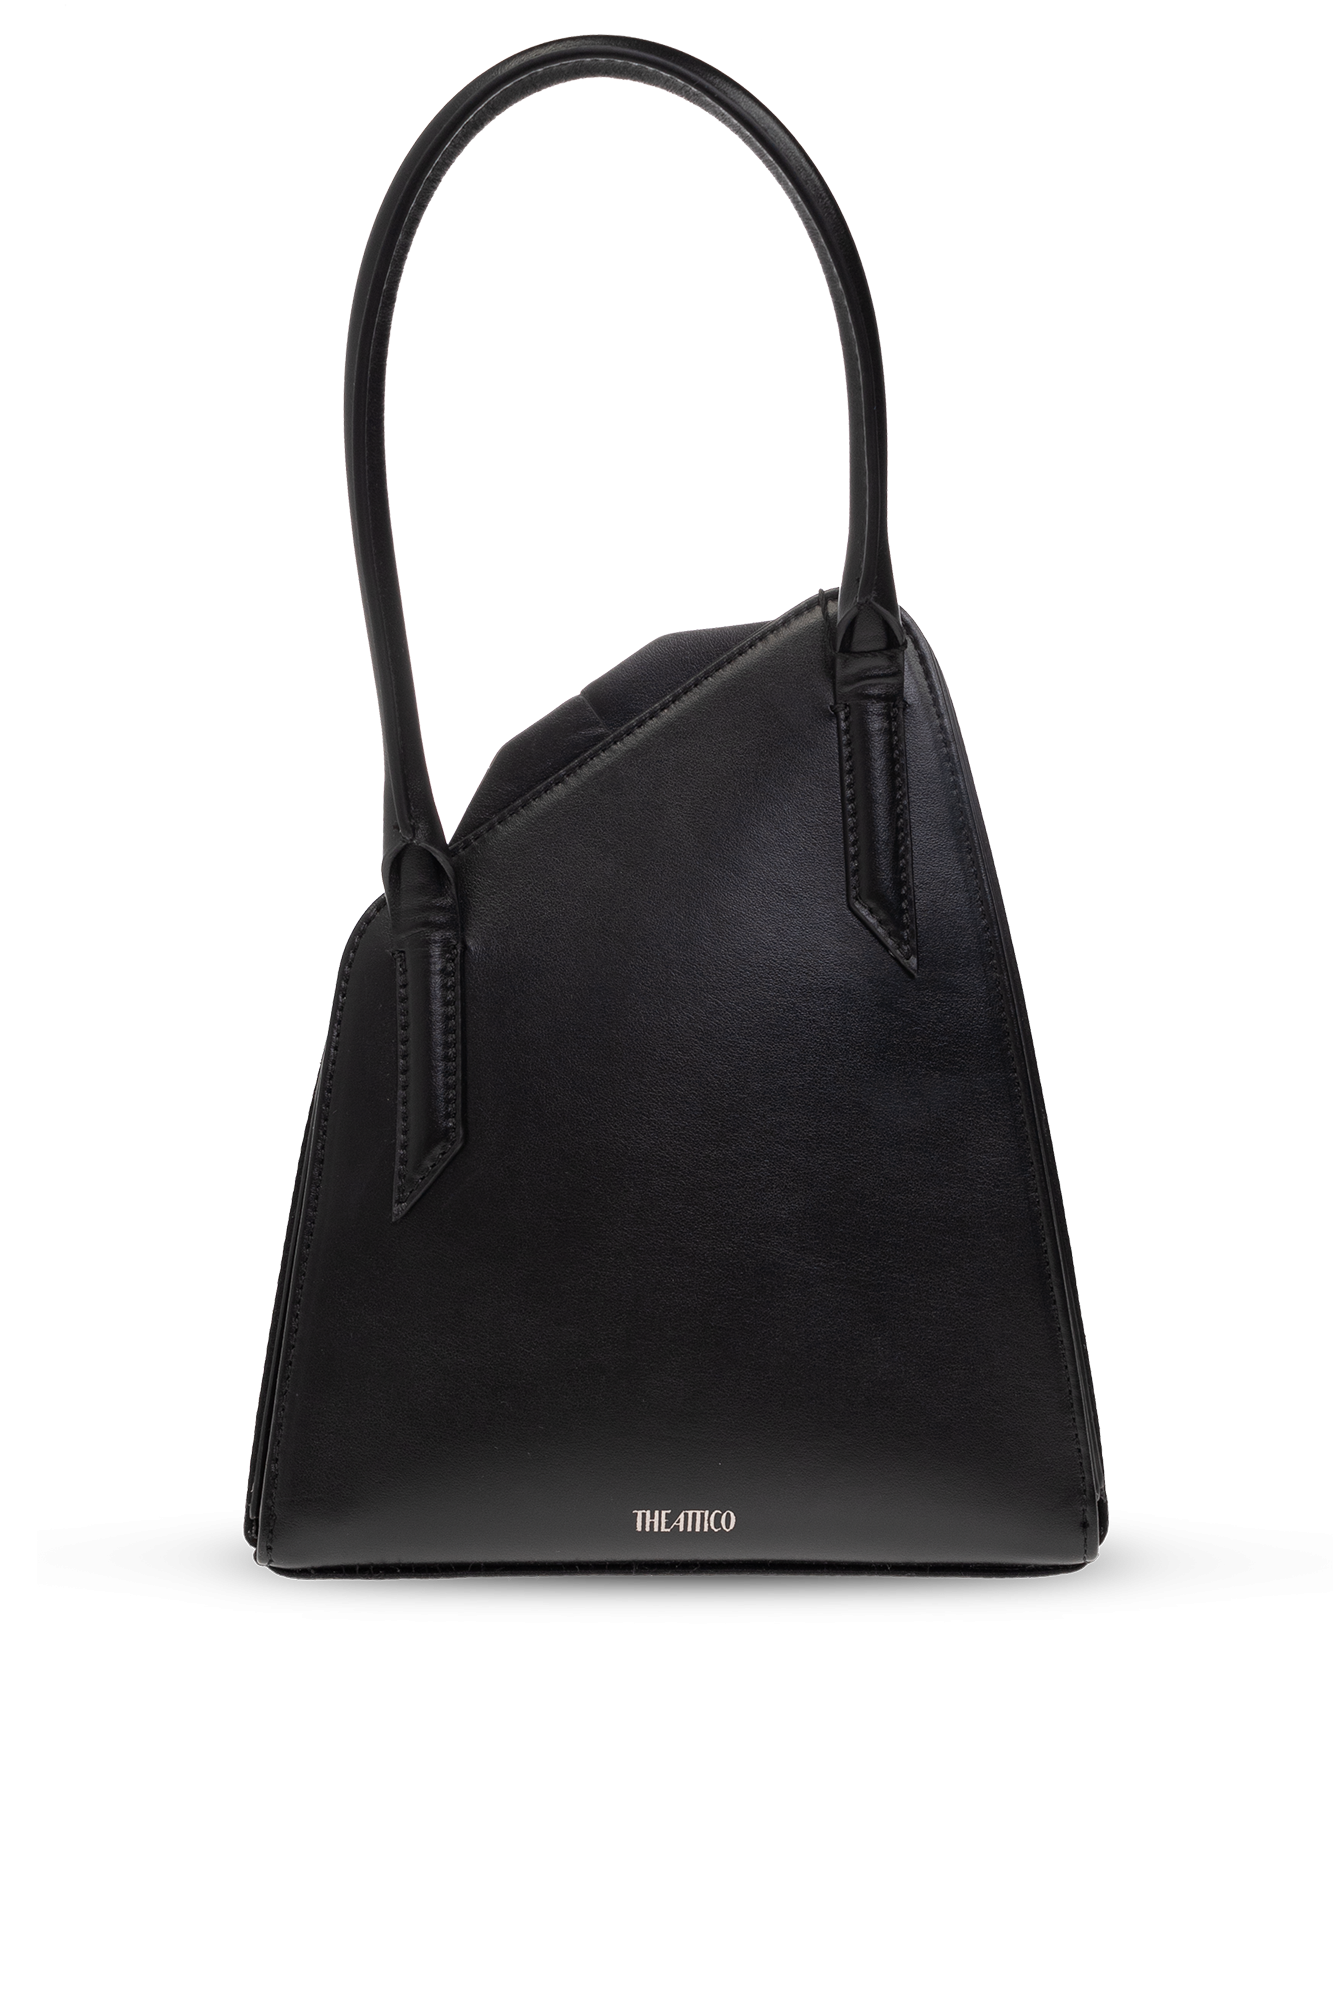 The Attico ‘Sunset’ handbag